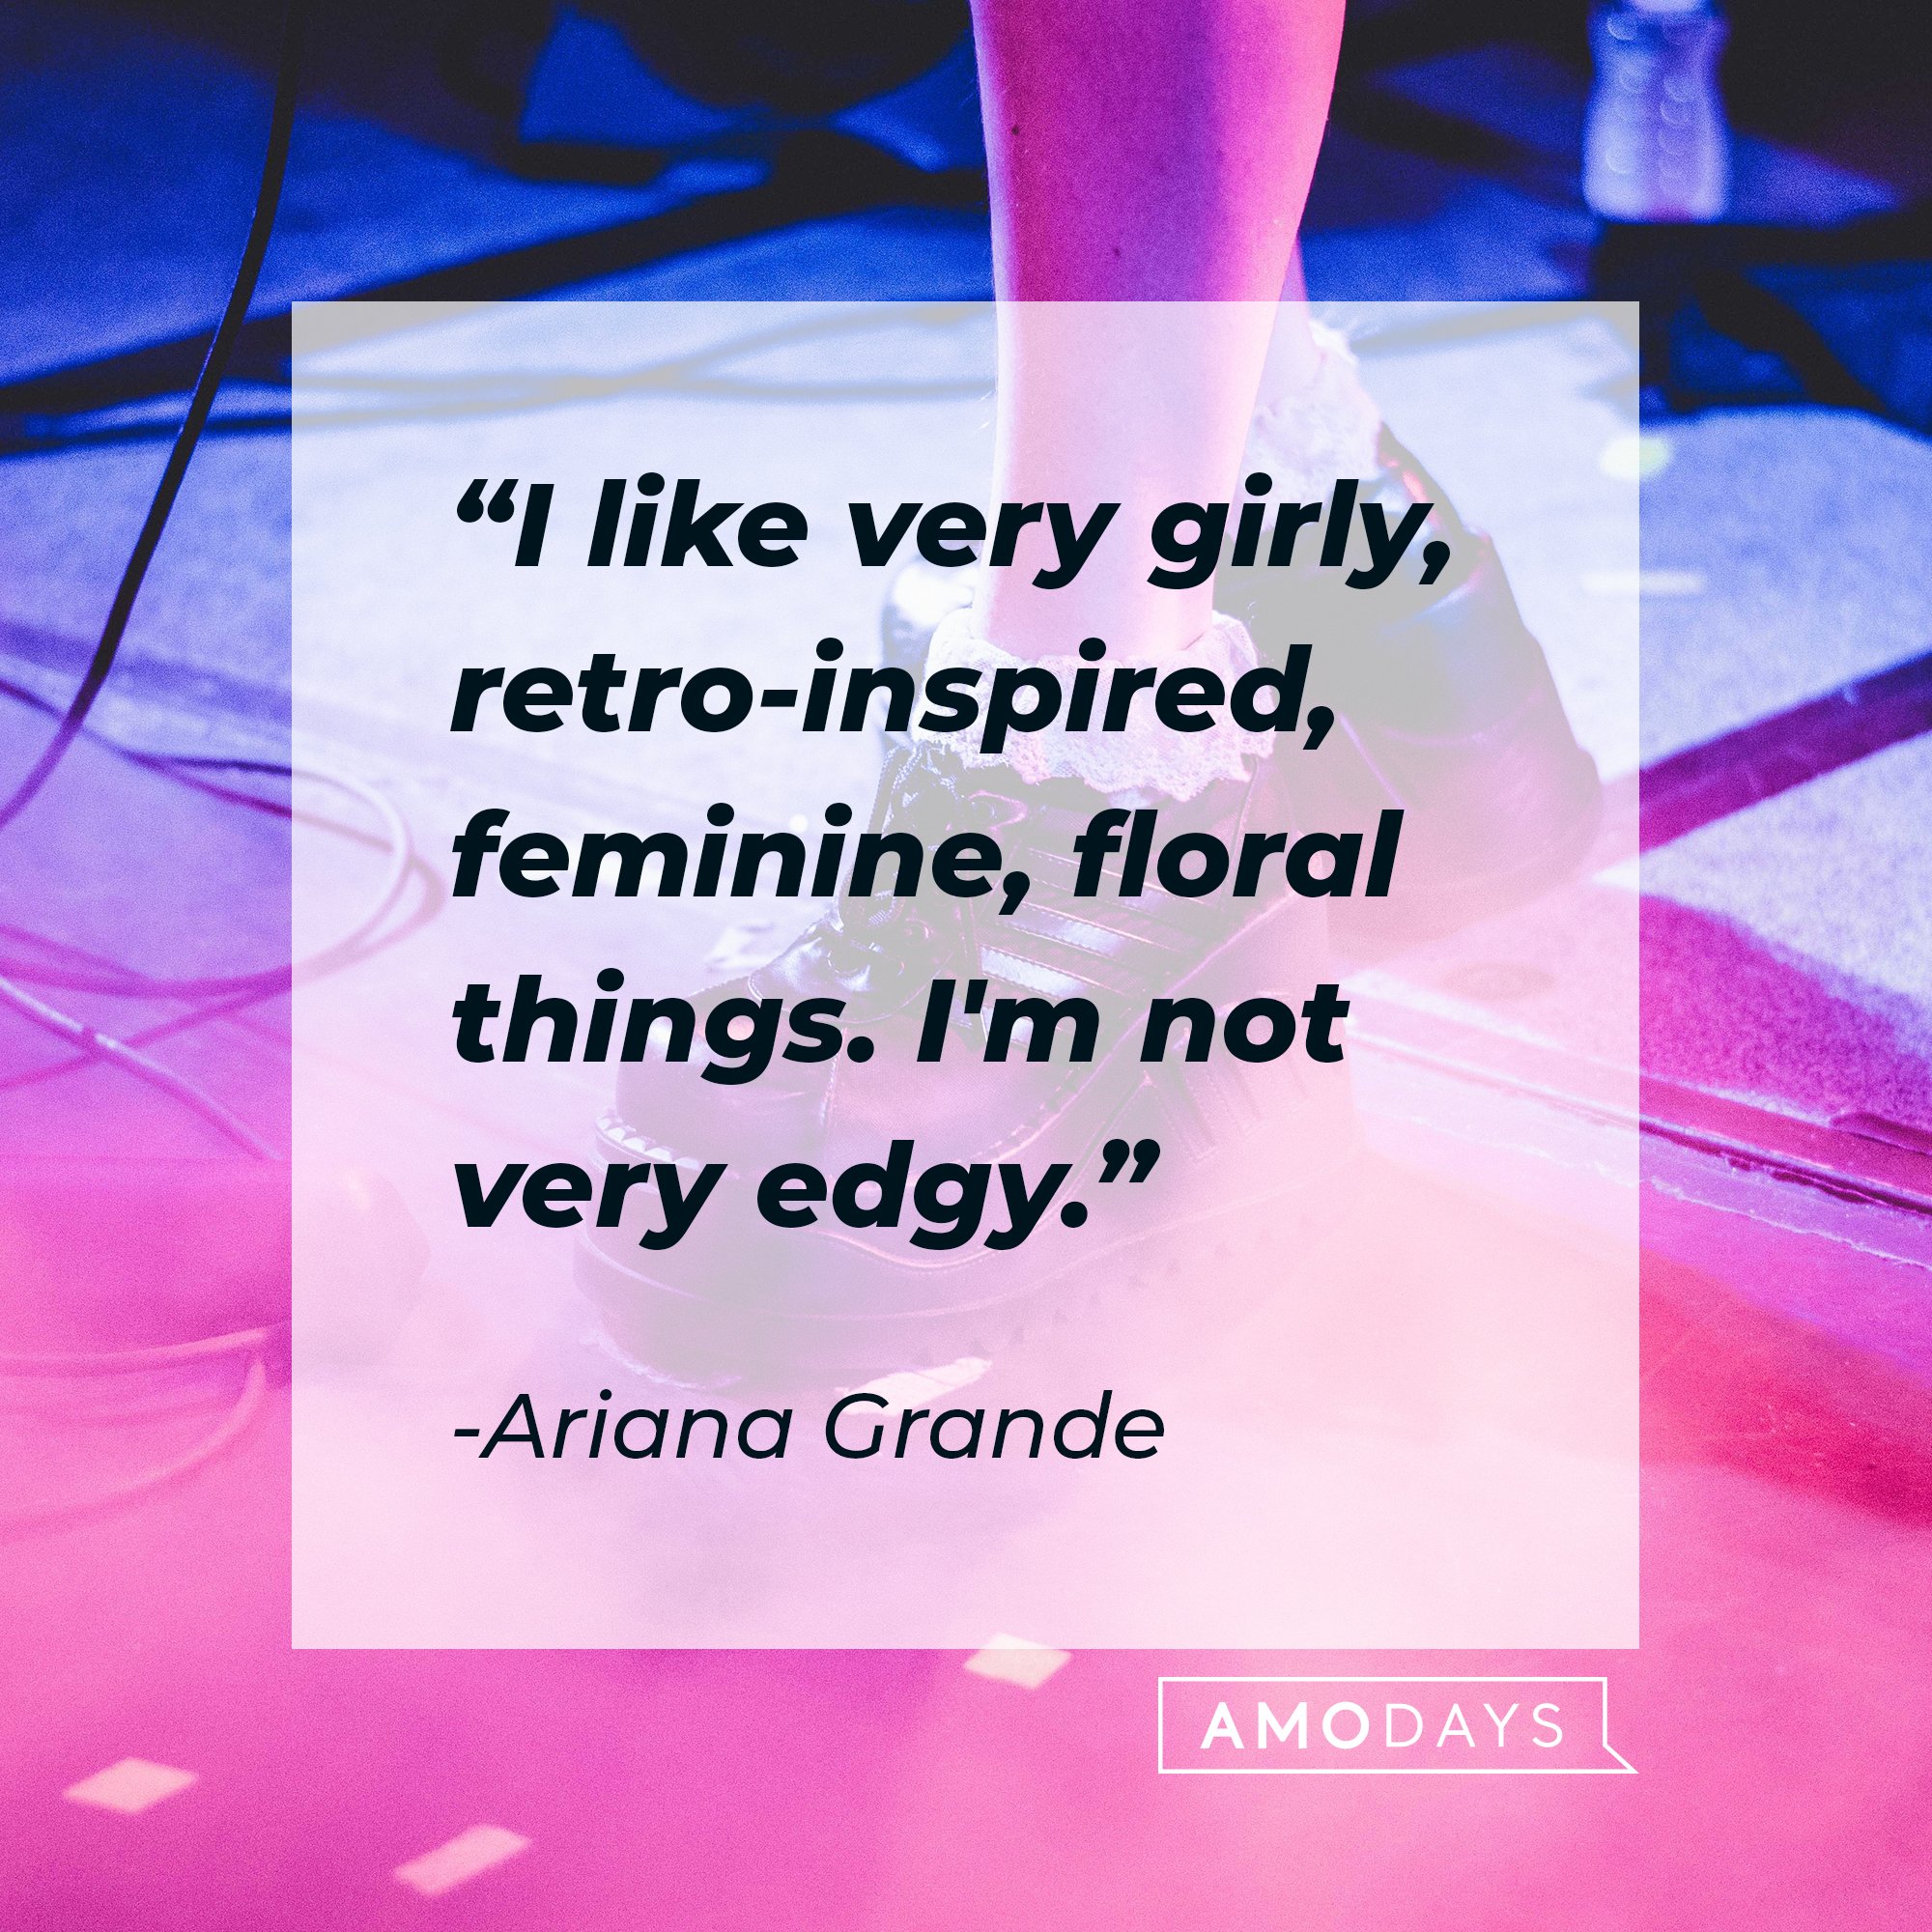 Ariana Grande’s quote: "I like very girly, retro-inspired, feminine, floral things. I'm not very edgy." | Image: AmoDays